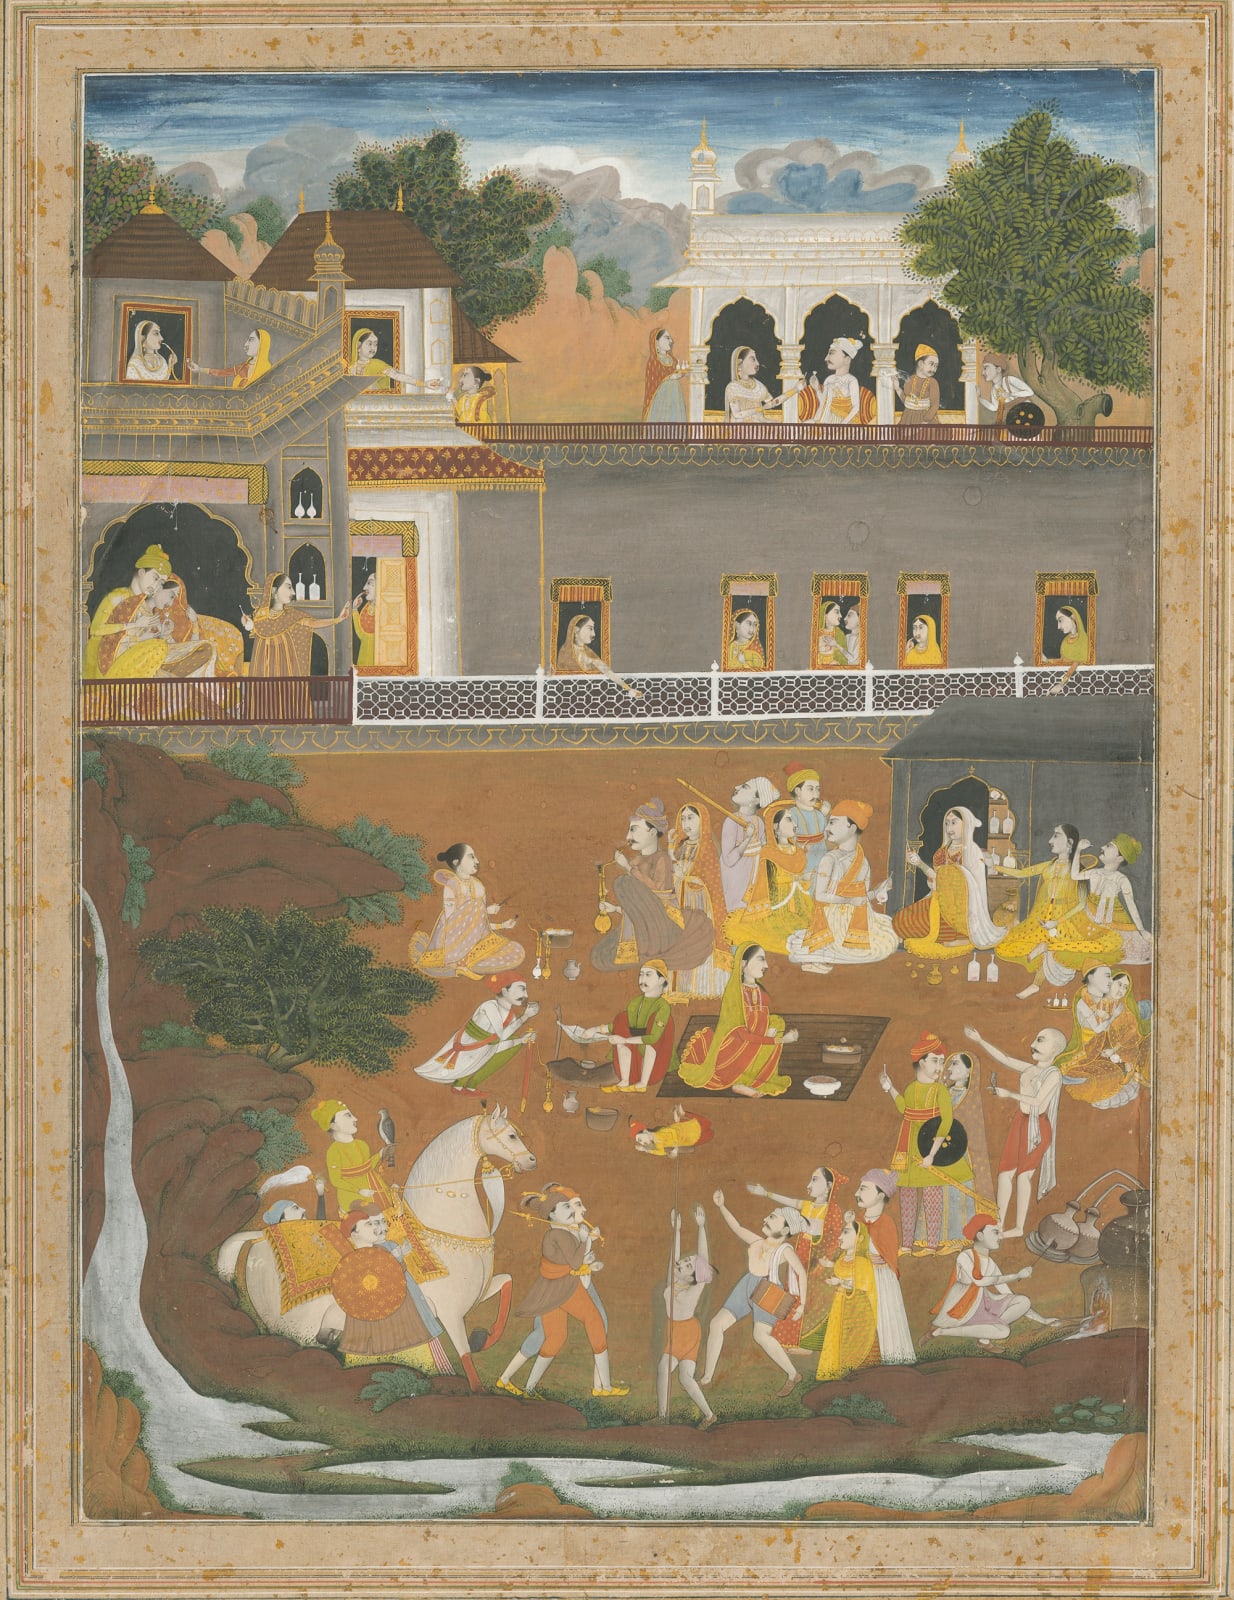 A Prince Chances upon a Riotous Party, Farrukhabad, 1760-70